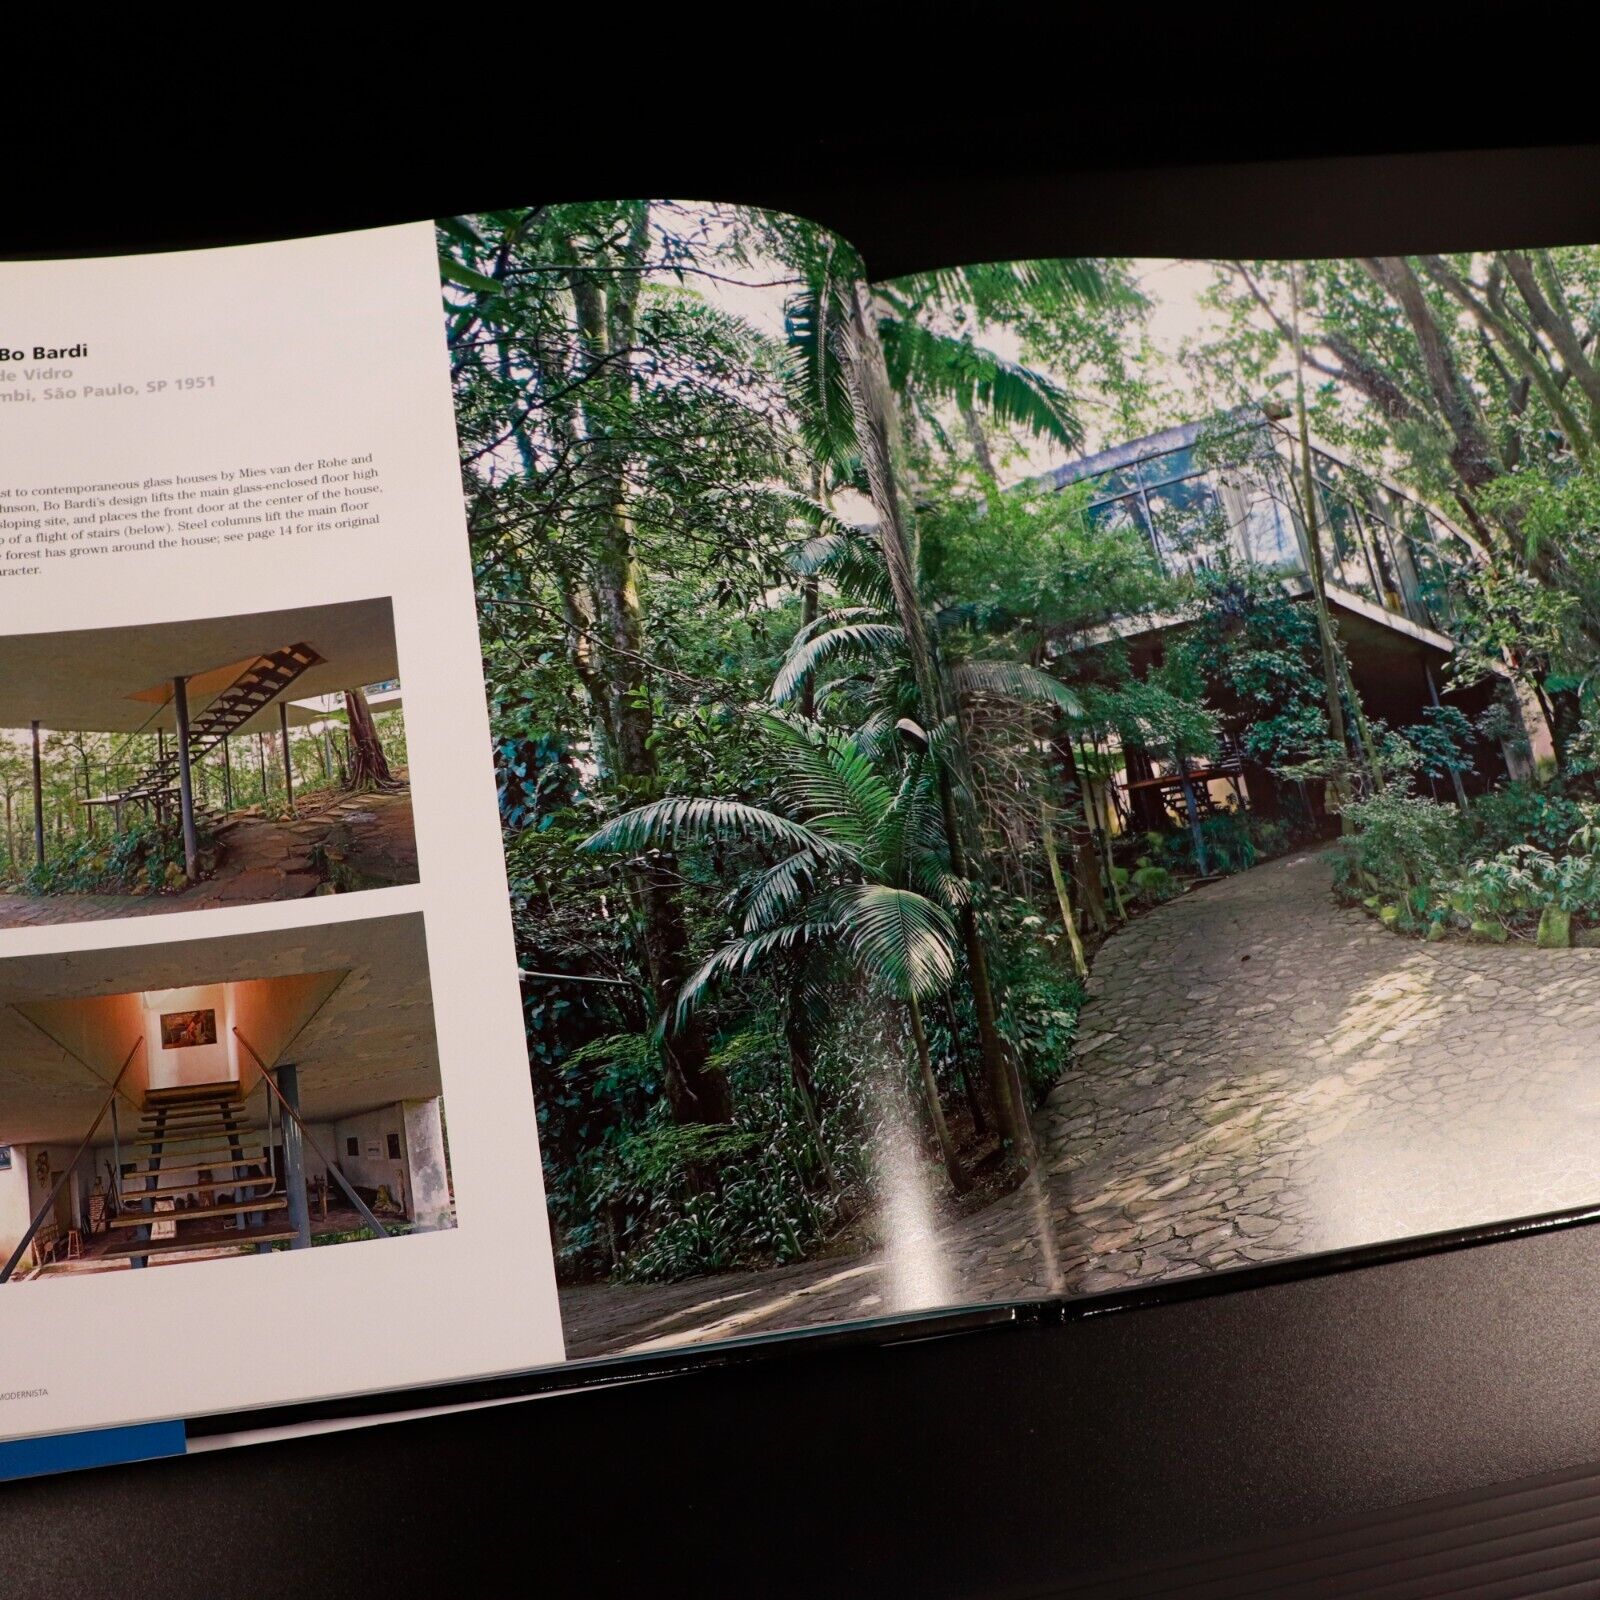 2010 Casa Modernista Brazil Modern House by Alan Hess Architecture Book 1st Ed.